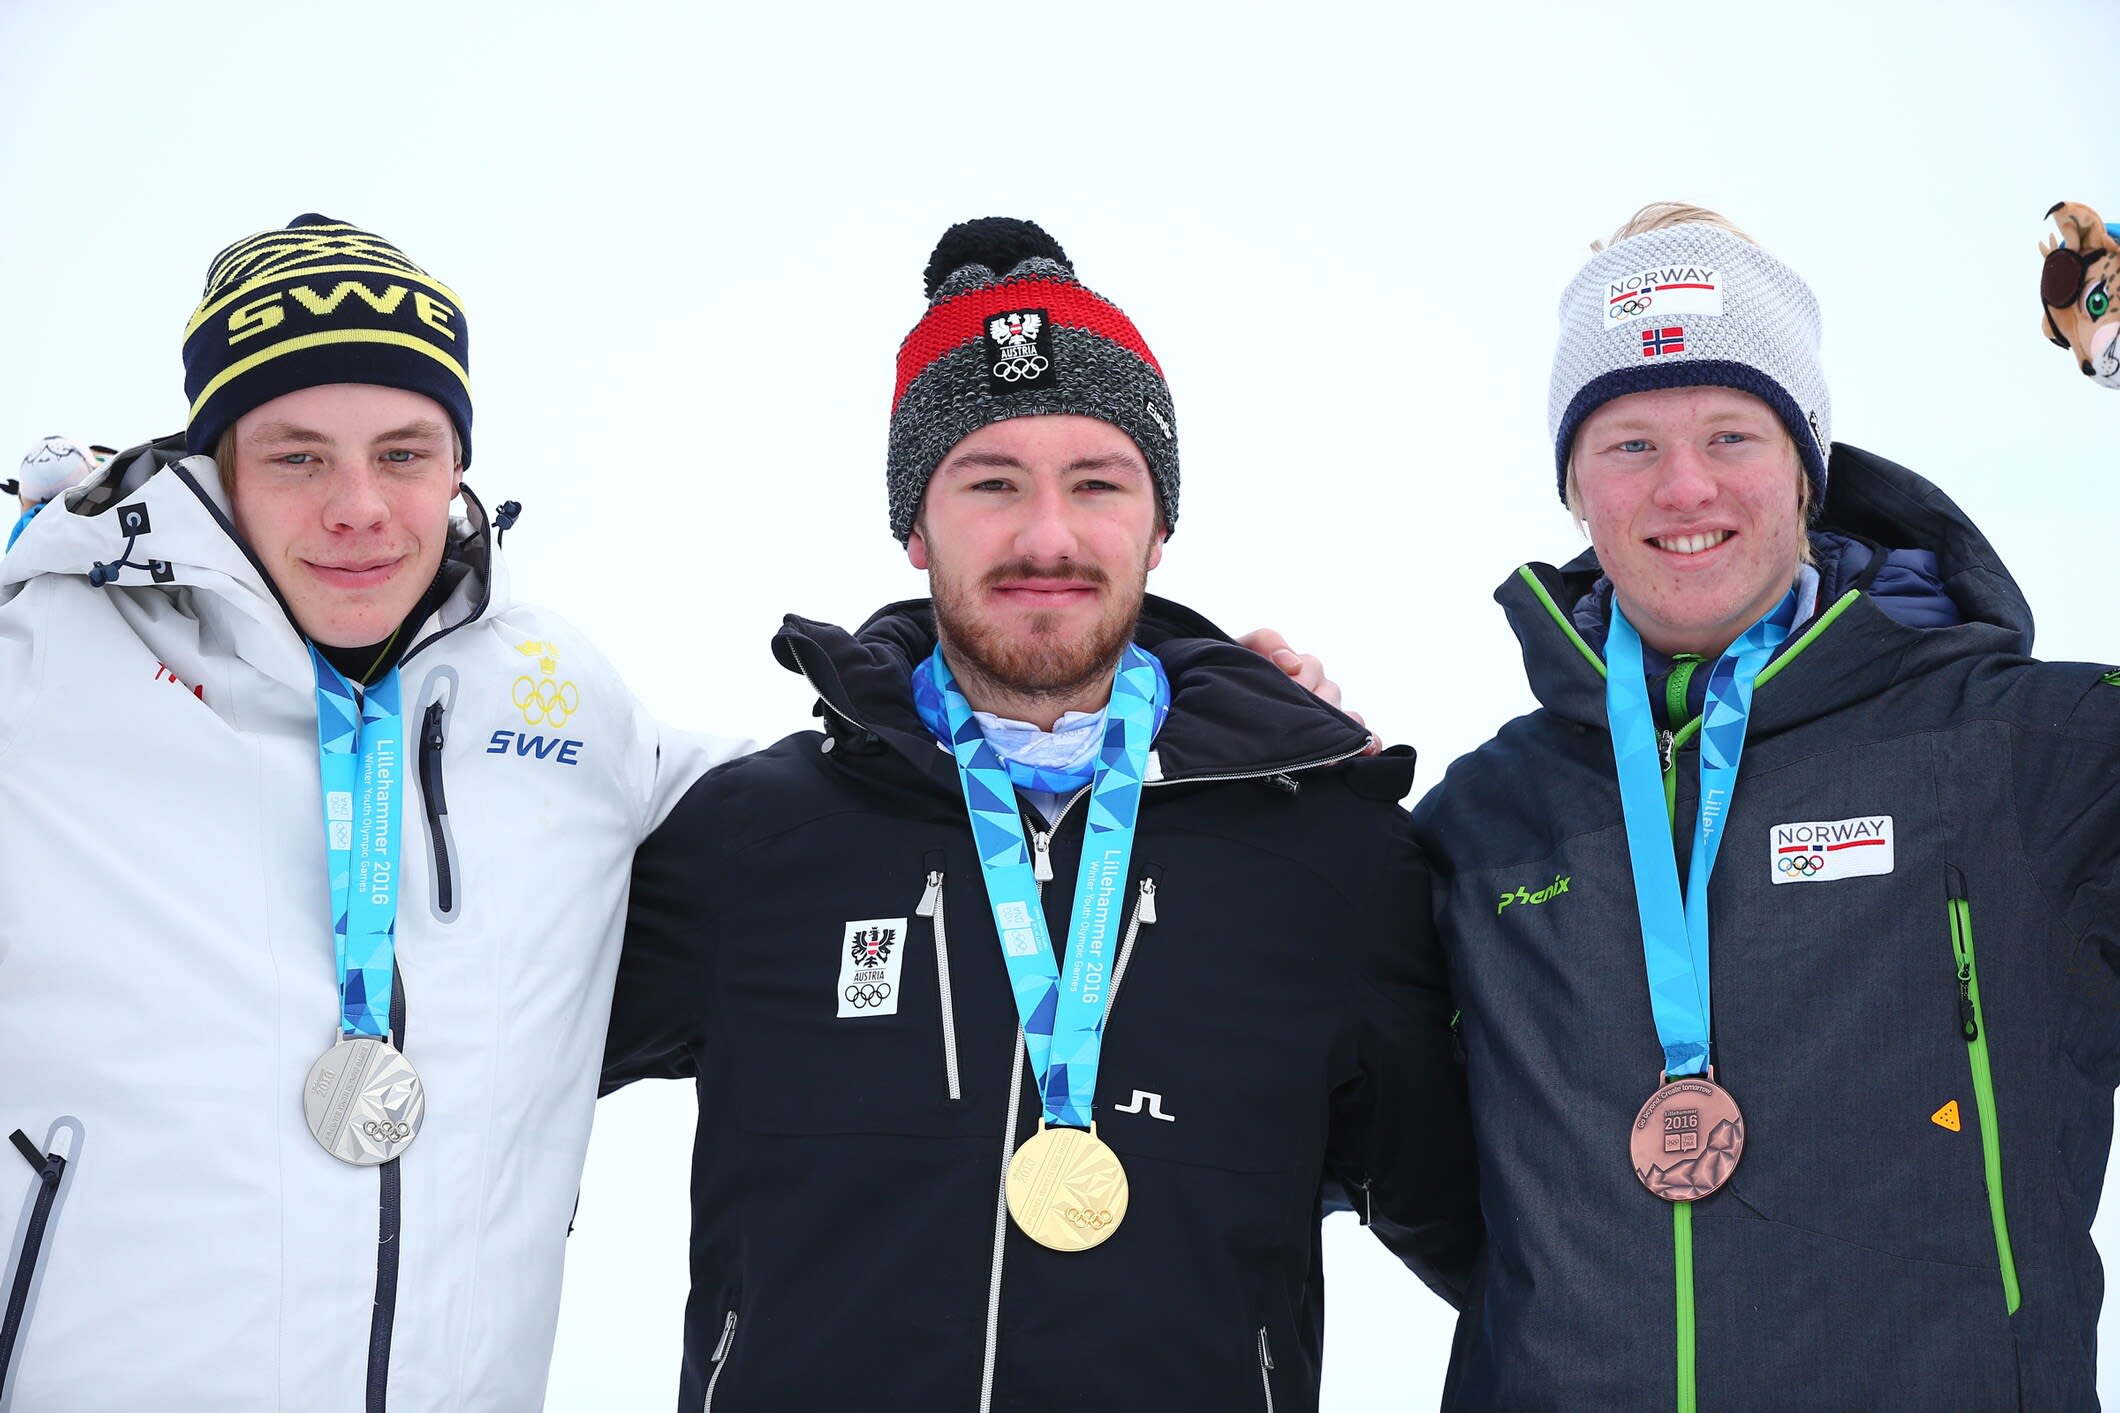 Manuel Traninger from Austria takes slalom gold